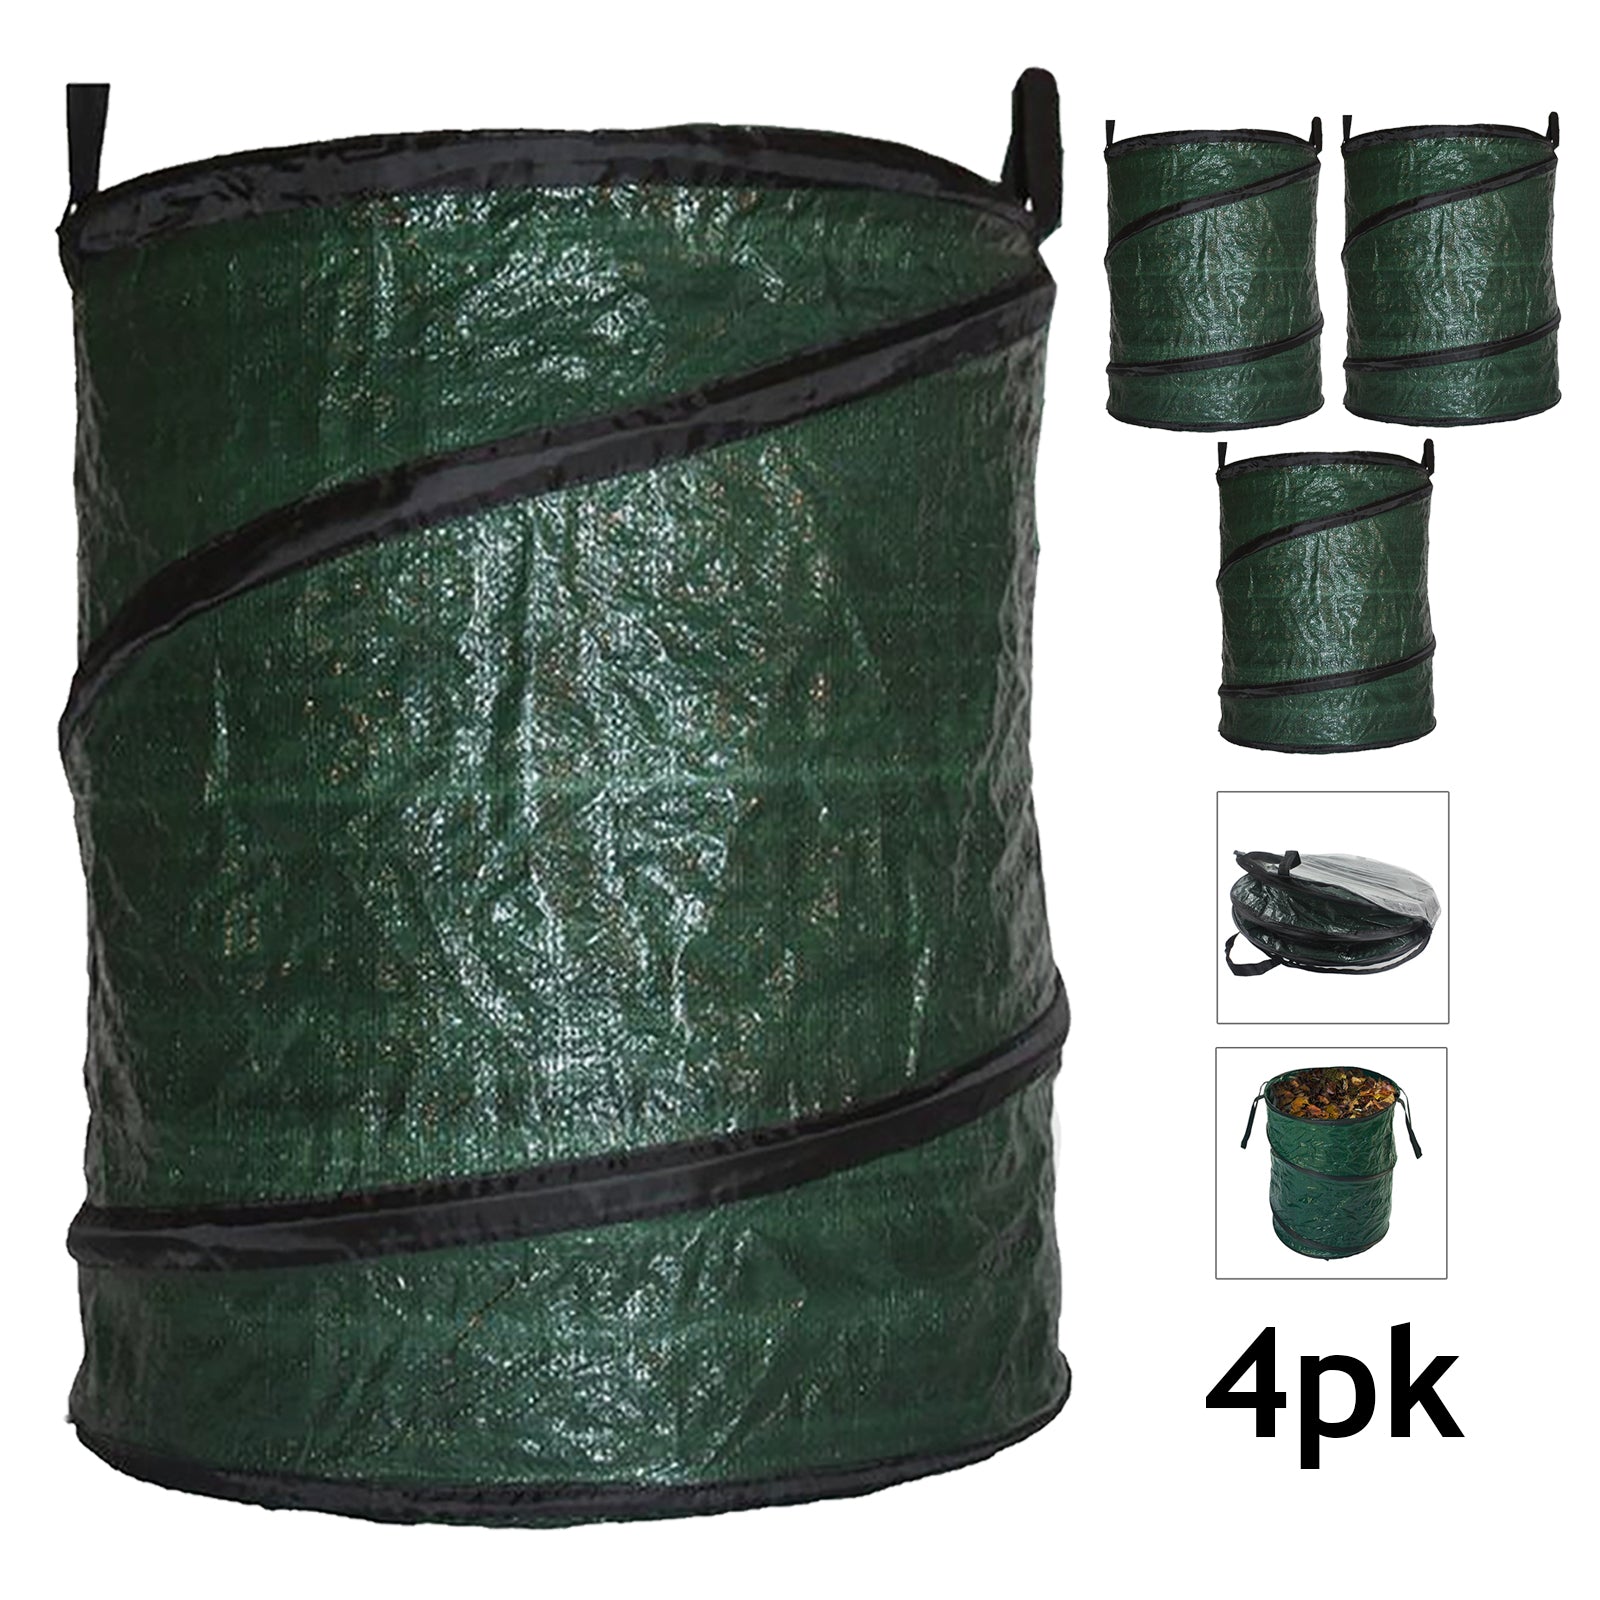 Collapsible Garden Bag Large Reusable Carry Handles Waste Bin Refuse Sack 90L x 4